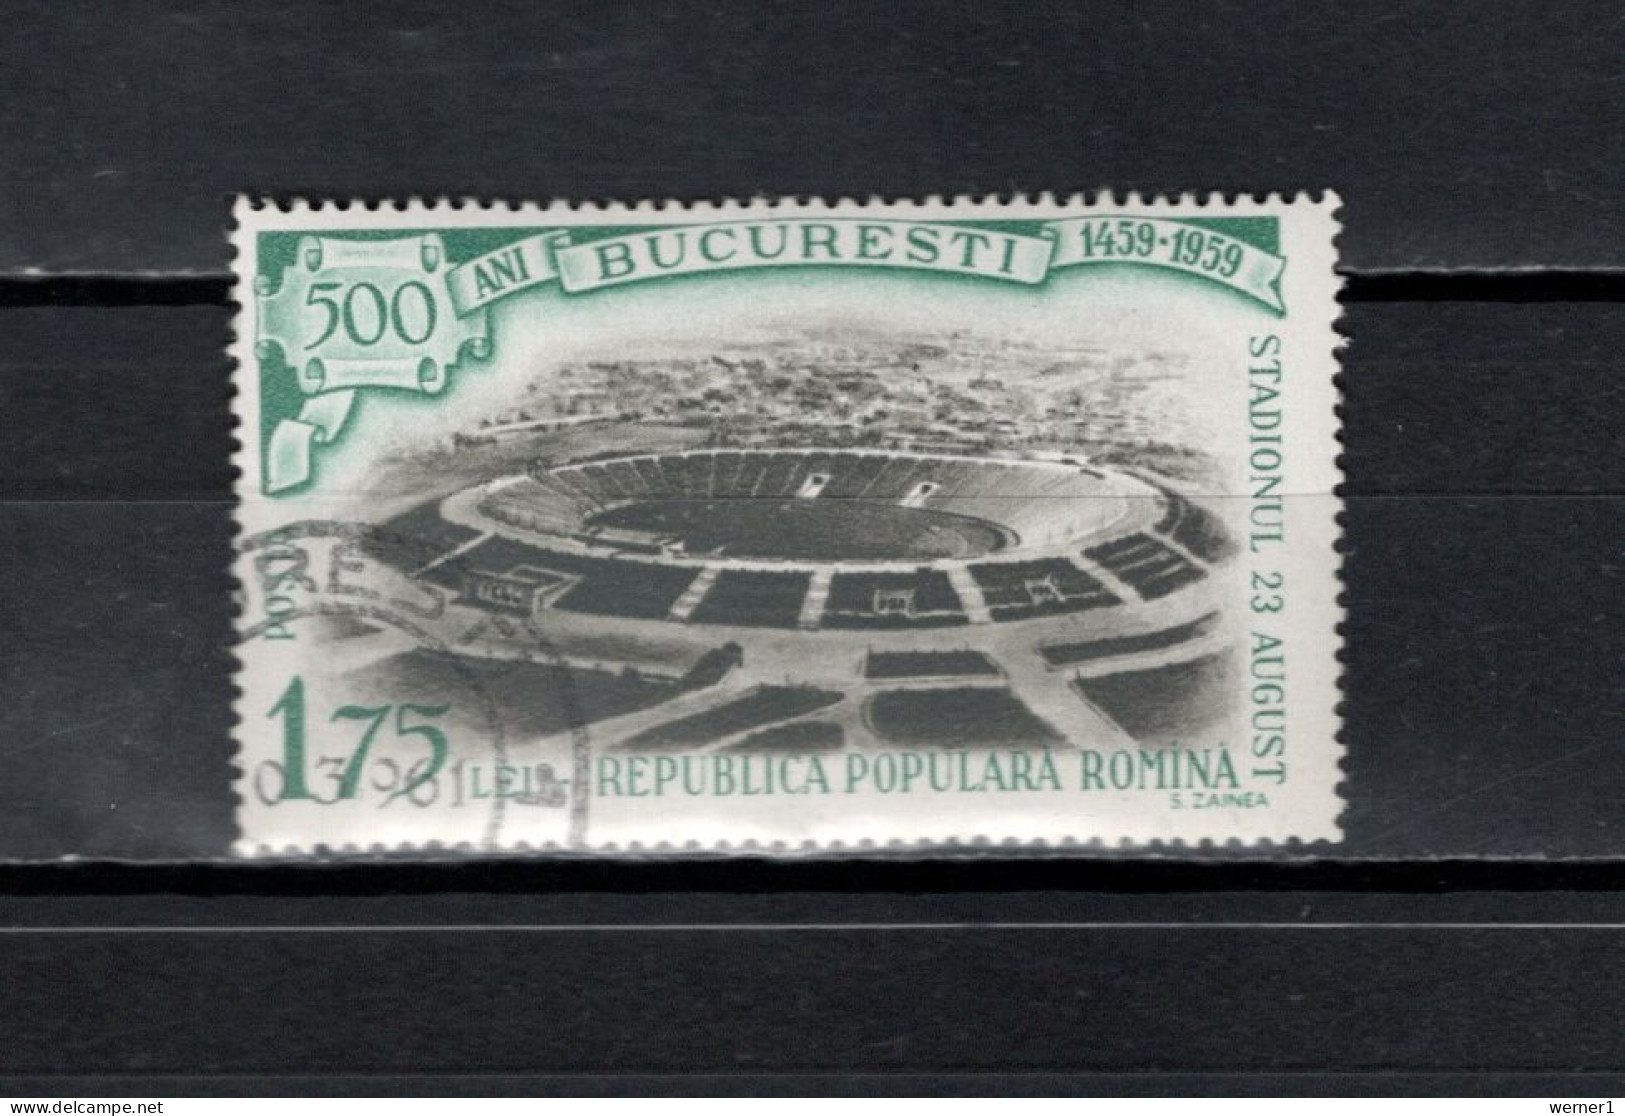 Romania 1959 Football Soccer Stadium Stamp CTO - Used Stamps